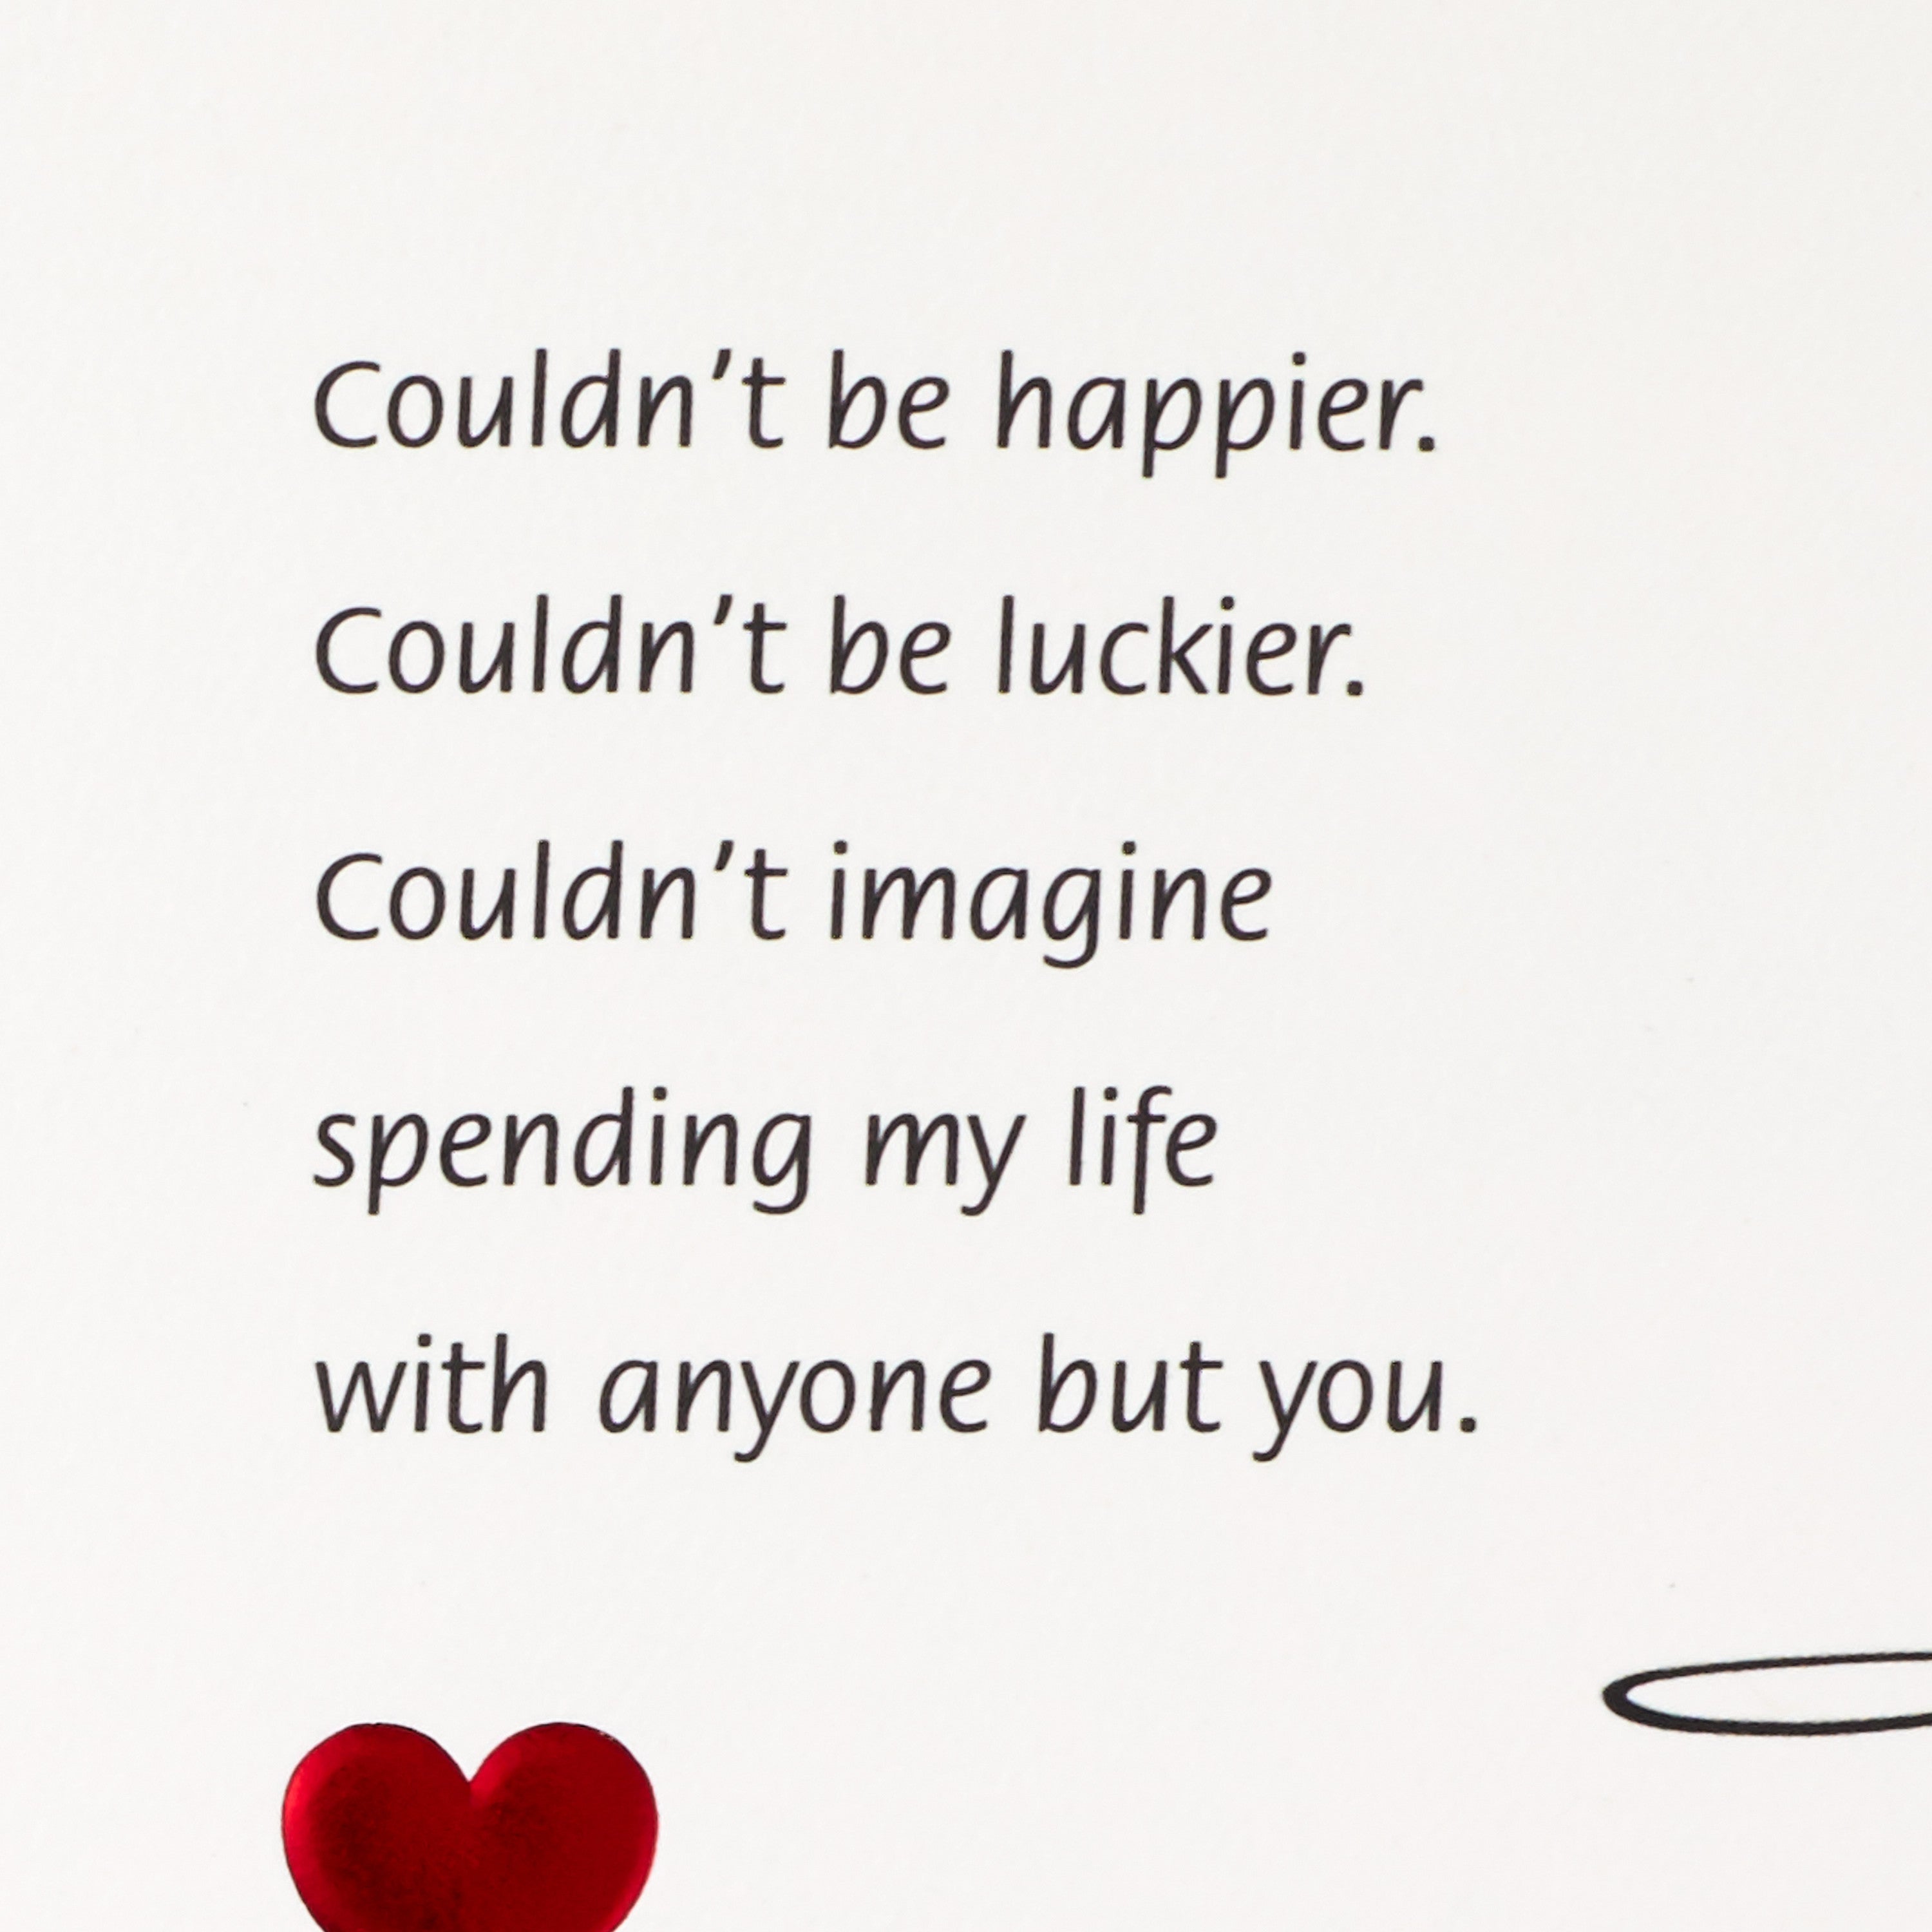 Hallmark Anniversary Card, Love Card, Romantic Birthday Card (You & Me)